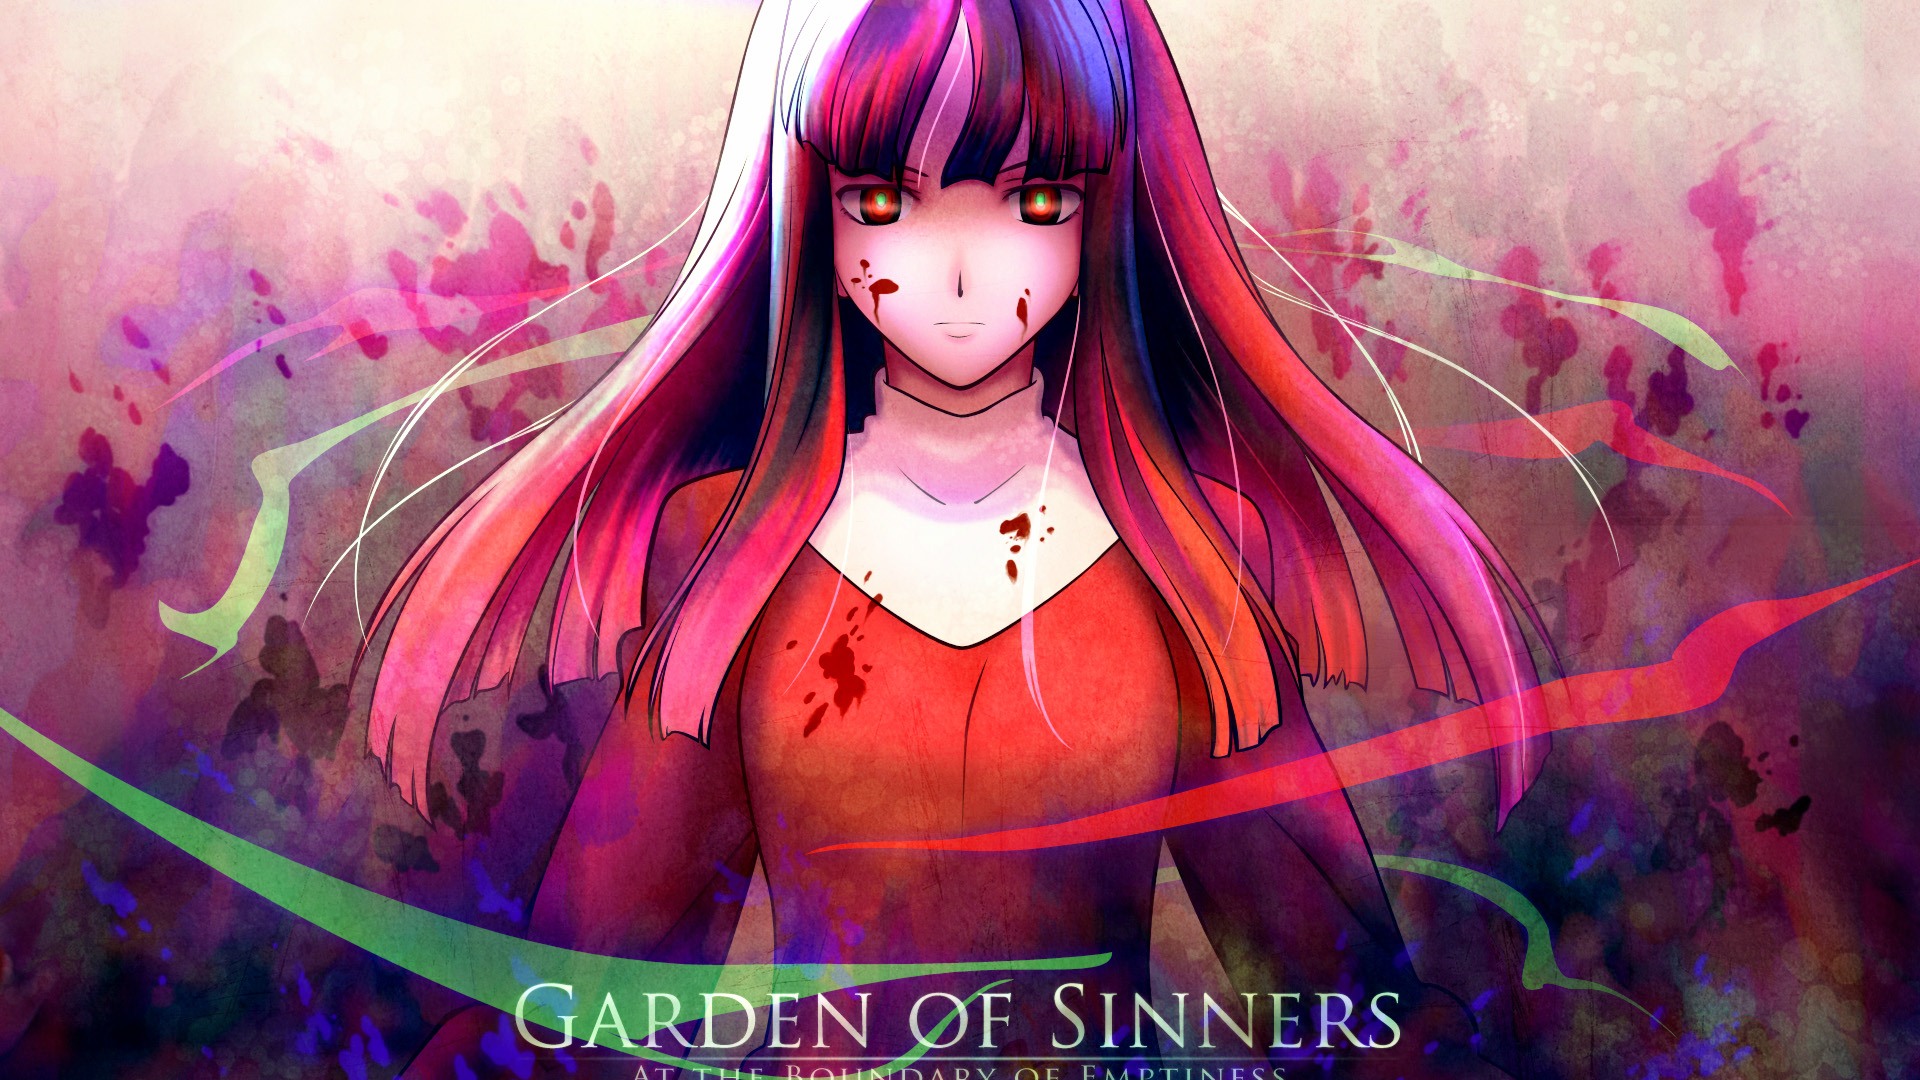 the Garden of sinners HD wallpapers #1 - 1920x1080